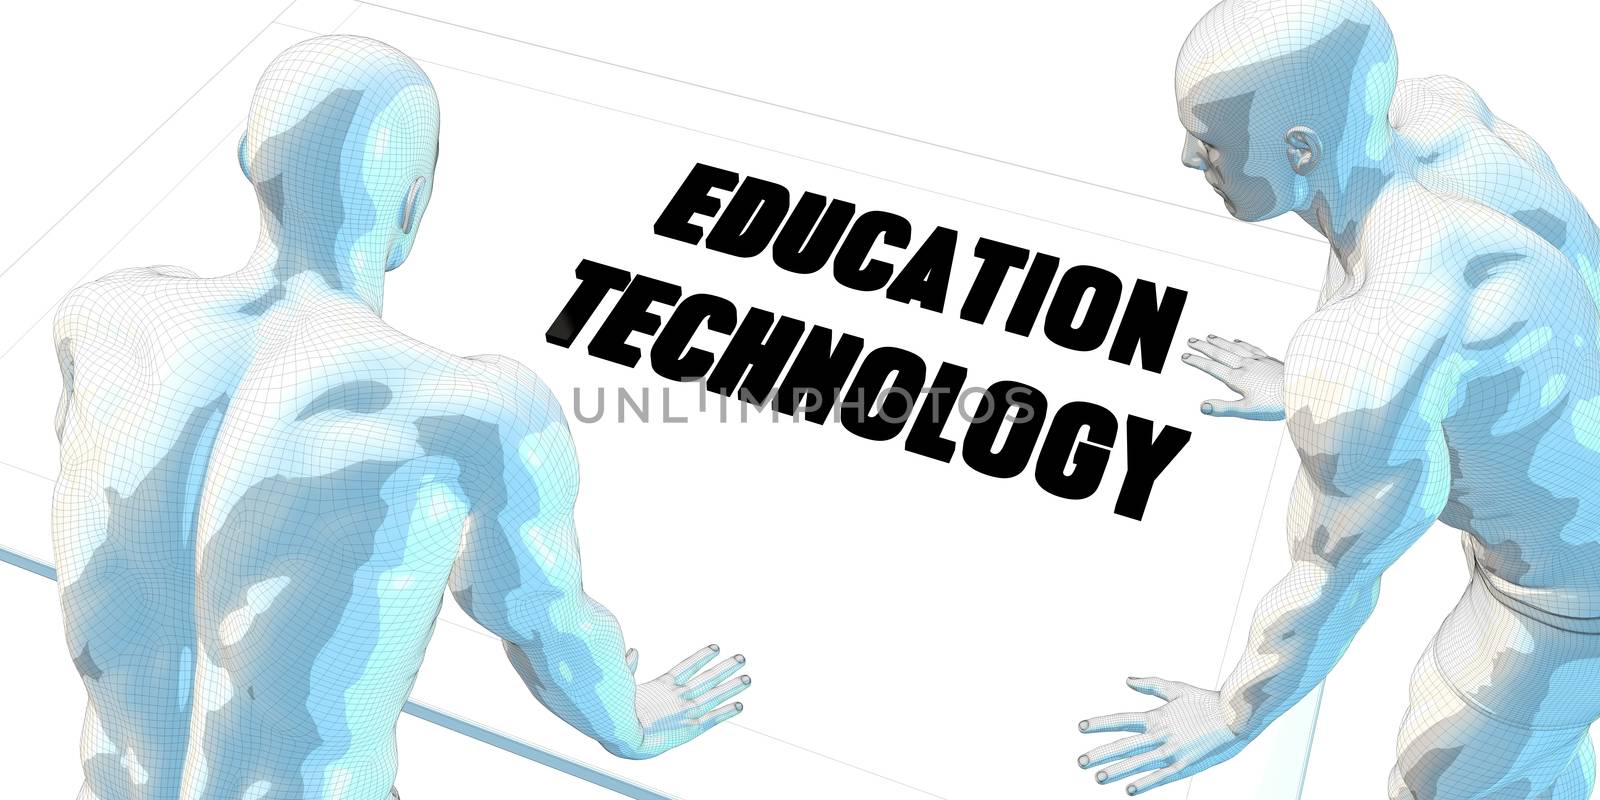 Education Technology by kentoh